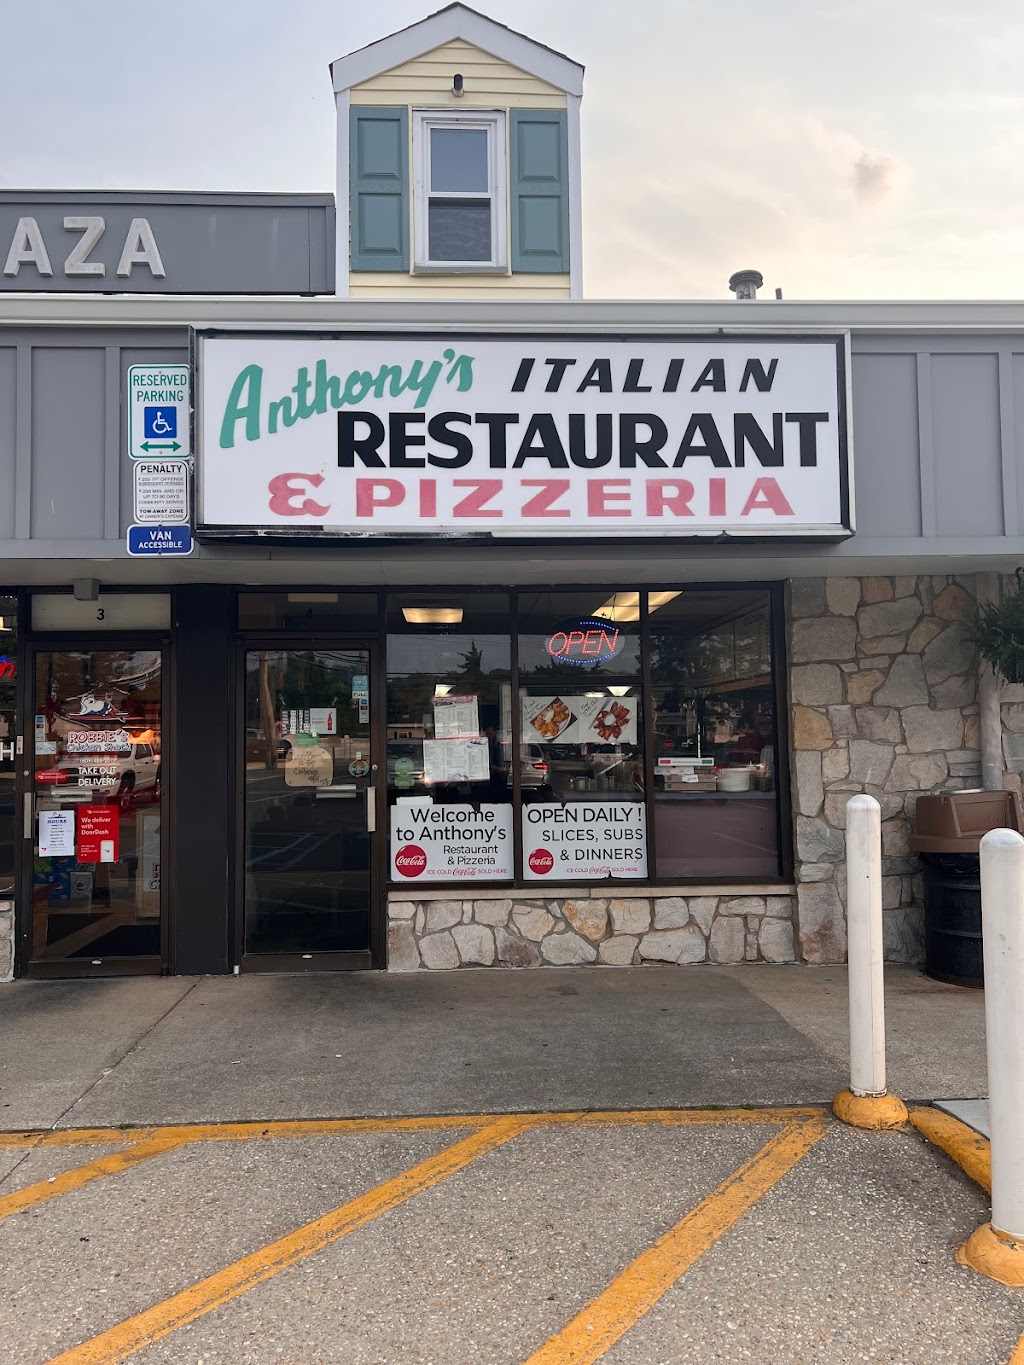 Anthonys Restaurant-Pizzeria | 857 Mill Creek Rd, Manahawkin, NJ 08050 | Phone: (609) 597-1156